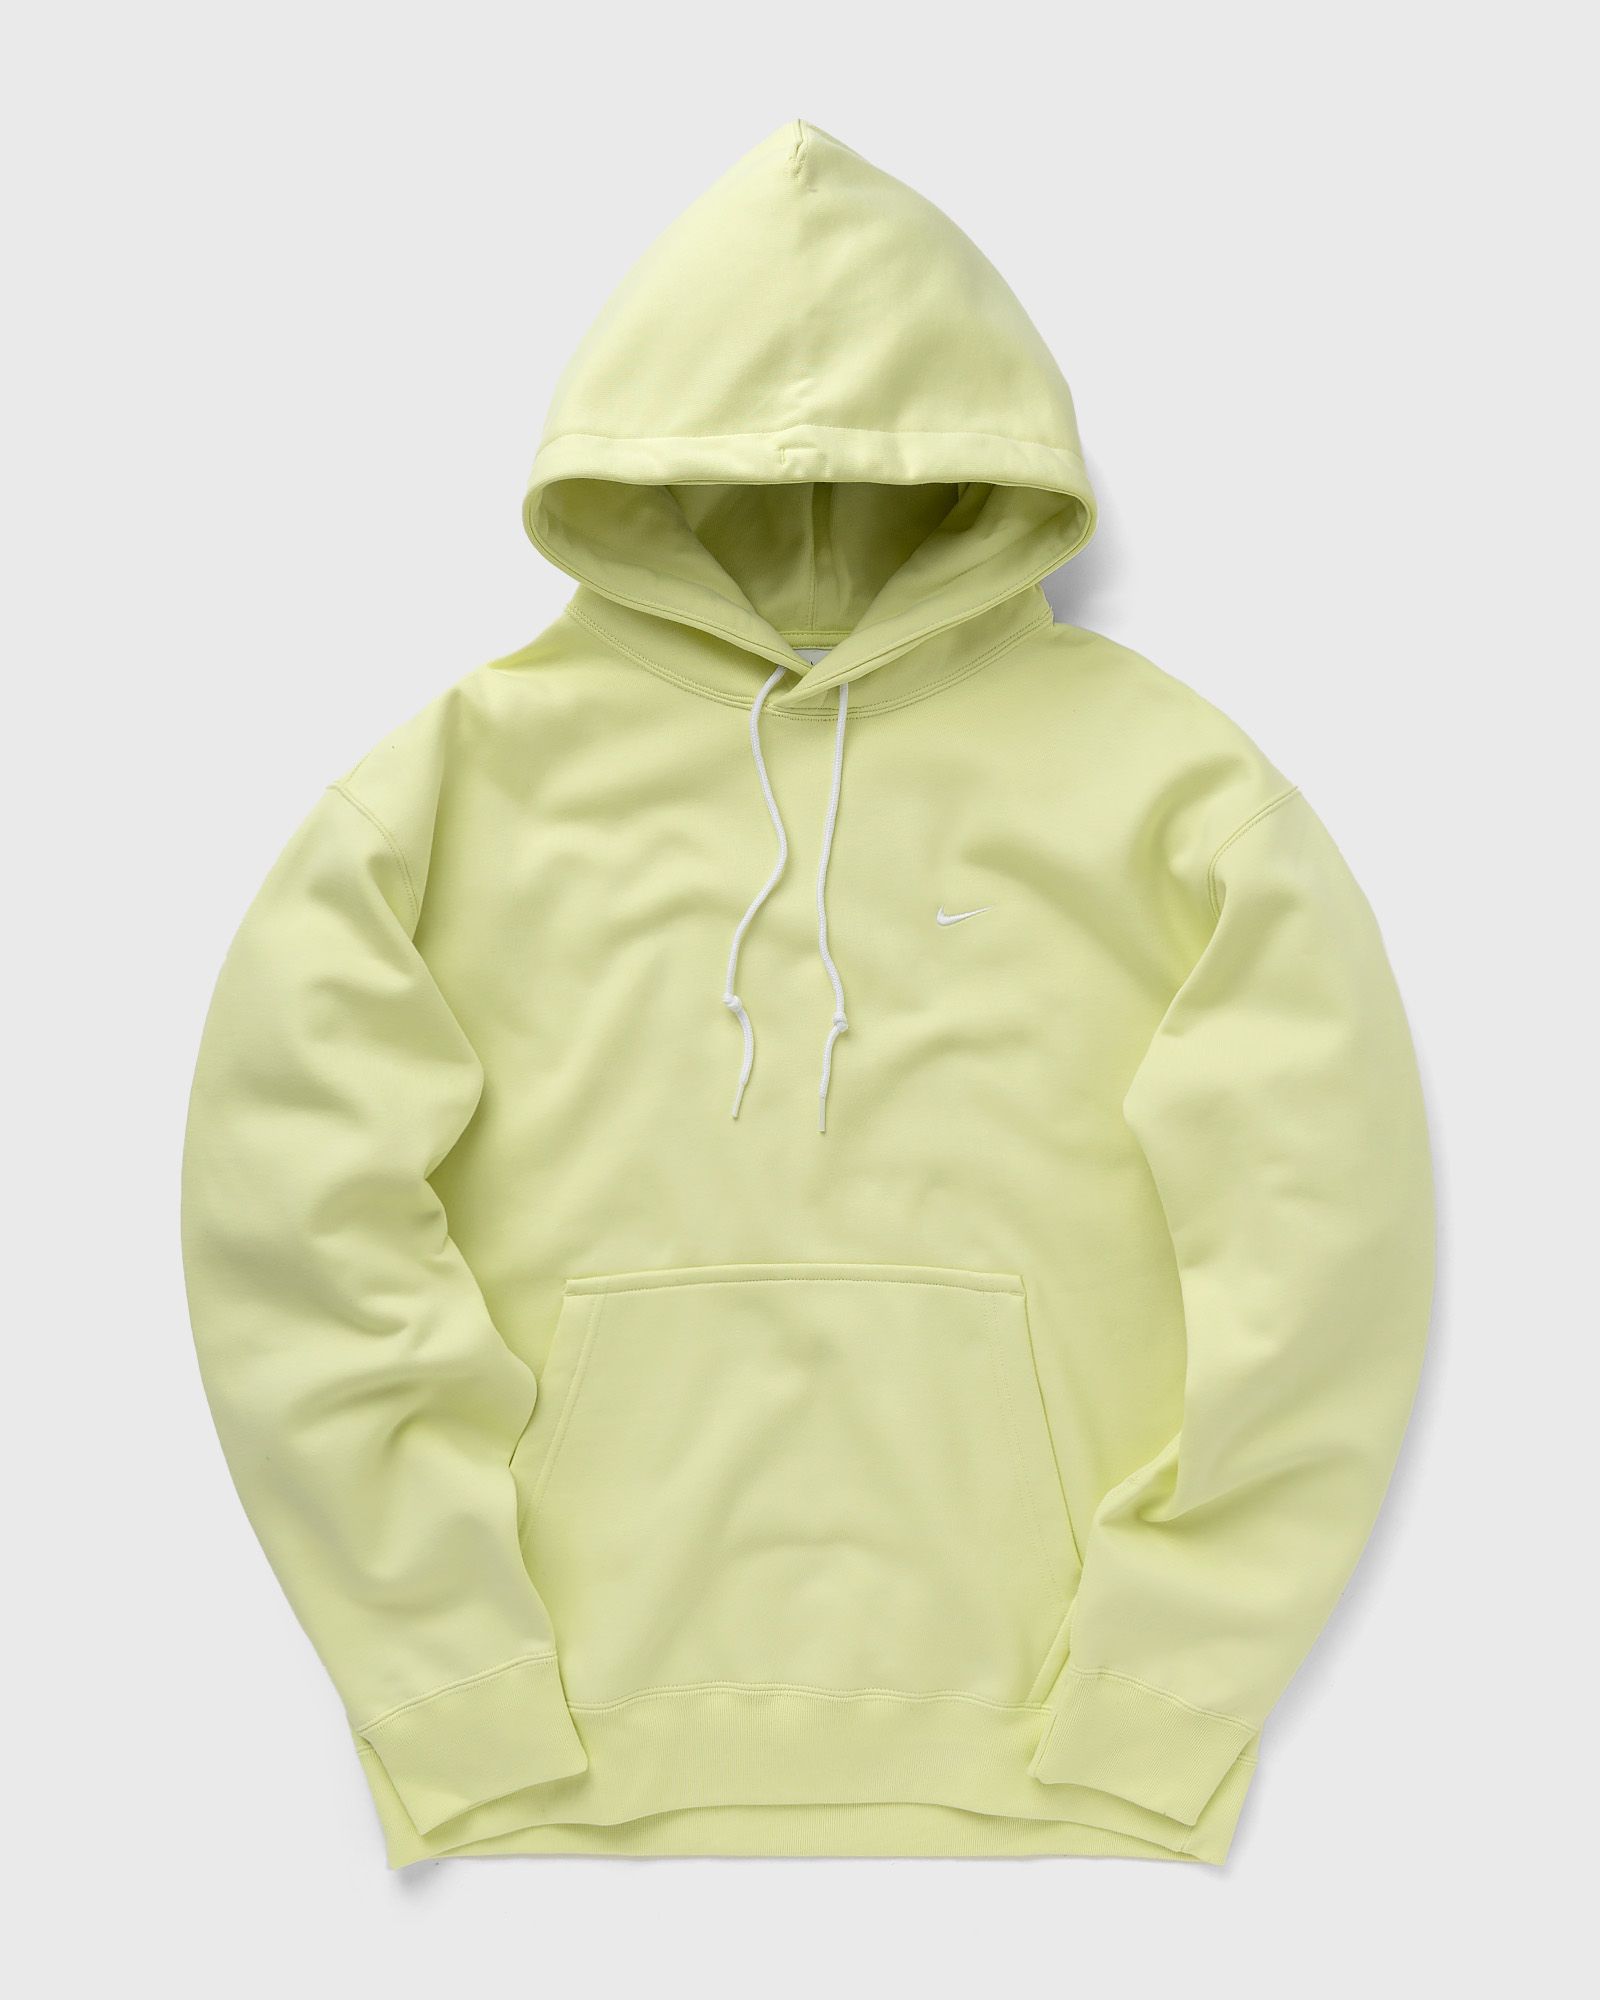 Nike - solo swoosh fleece pullover hoodie men hoodies yellow in größe:xl